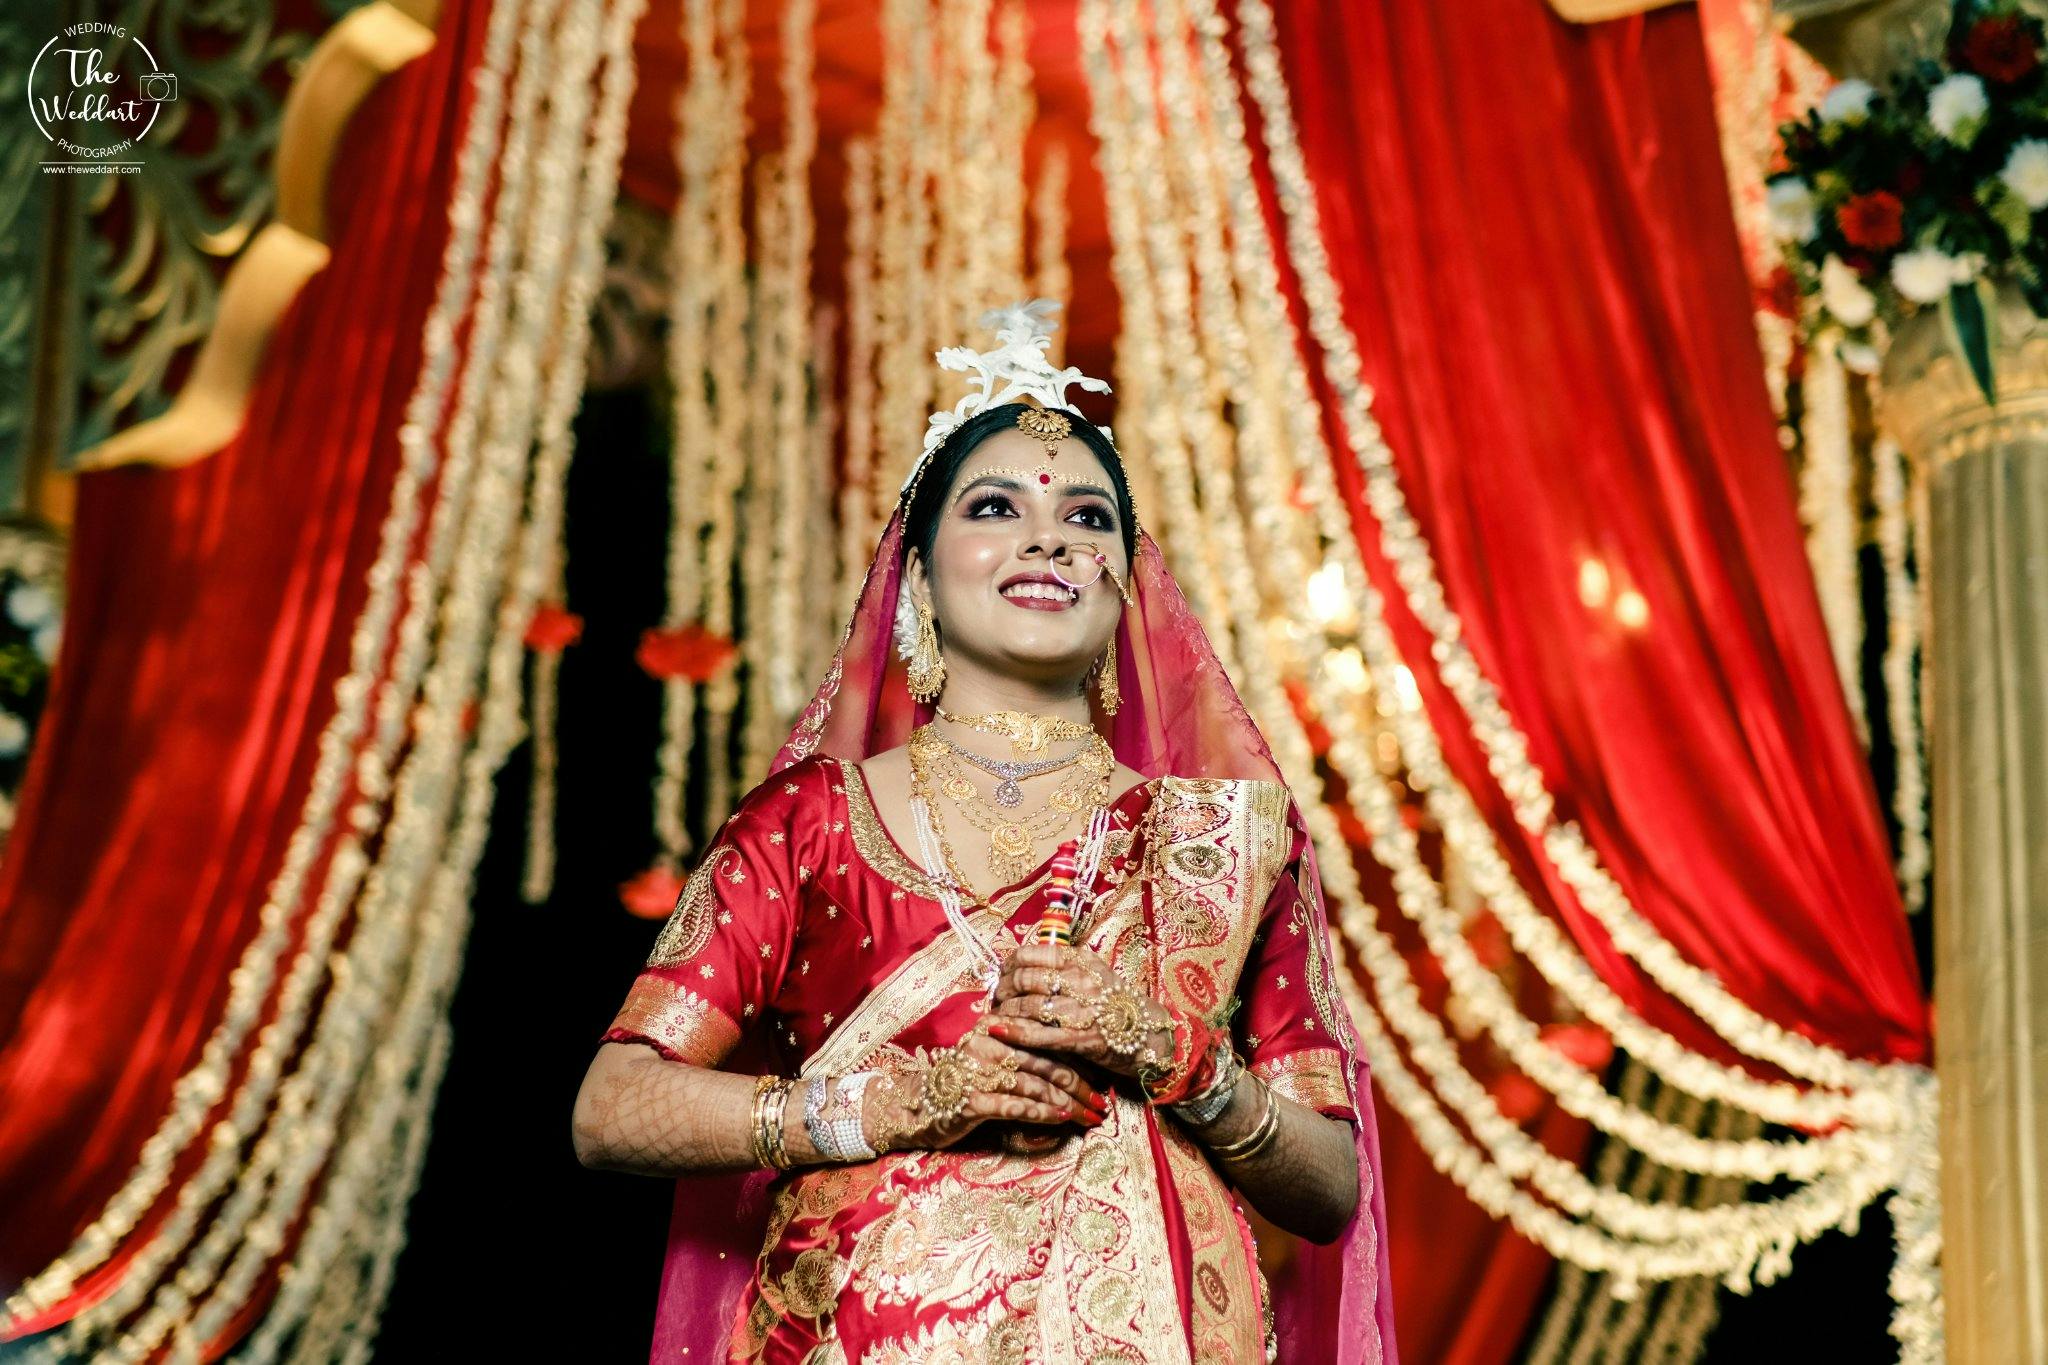 lehenga saree blouse designs for bridal